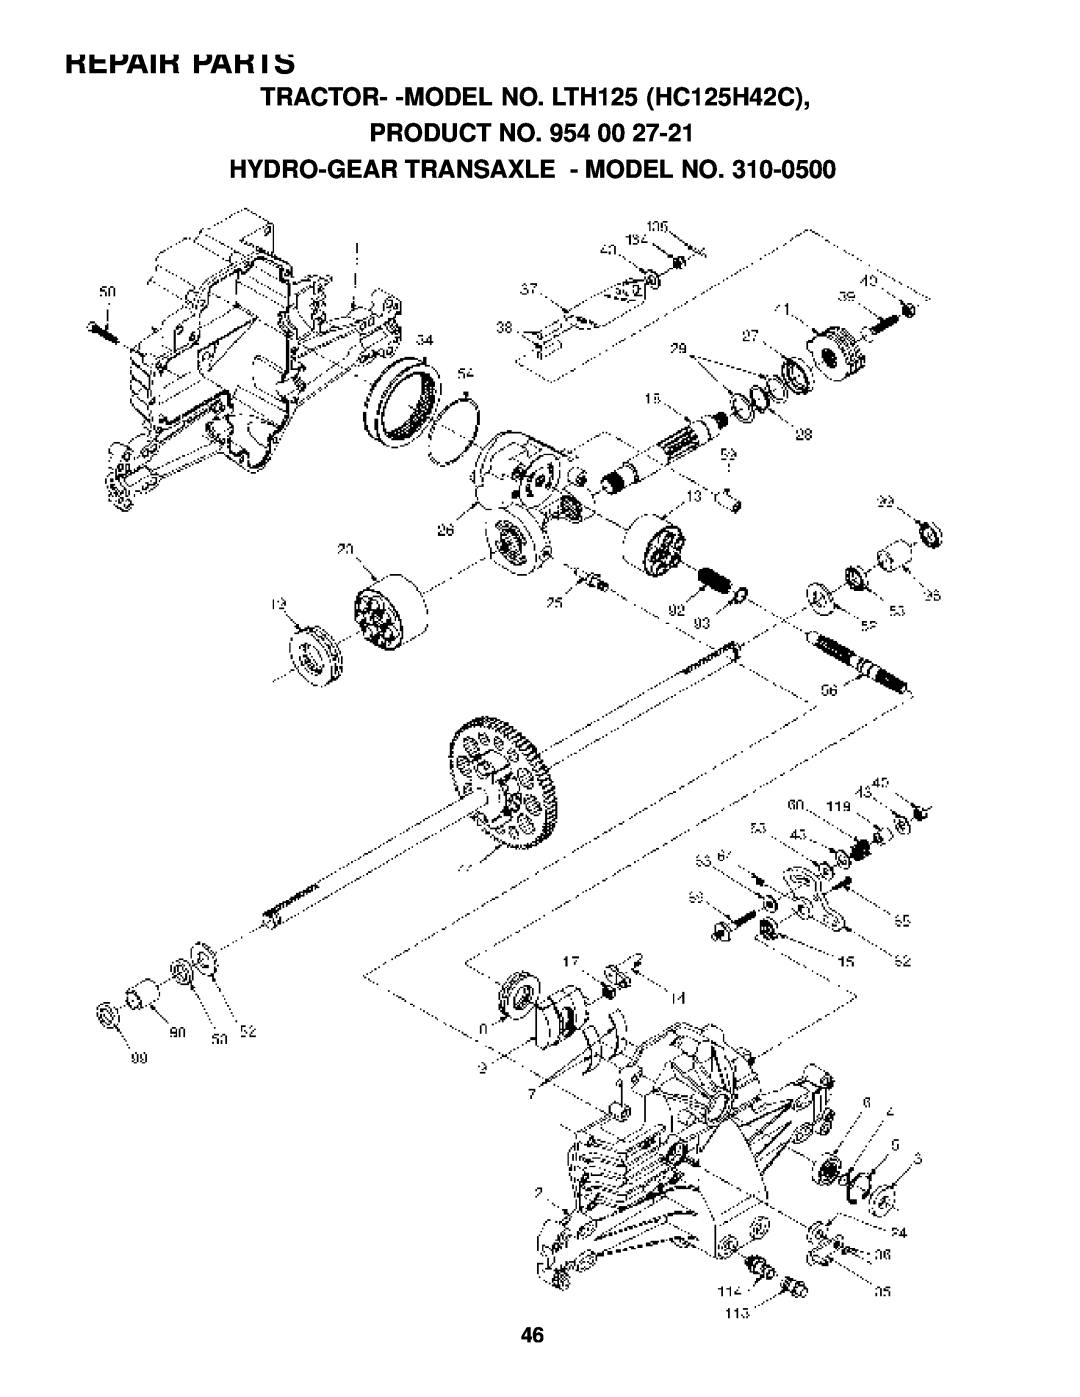 Husqvarna owner manual Hydro-Gear Transaxle - Model No, Repair Parts, TRACTOR- -MODEL NO. LTH125 HC125H42C PRODUCT NO 